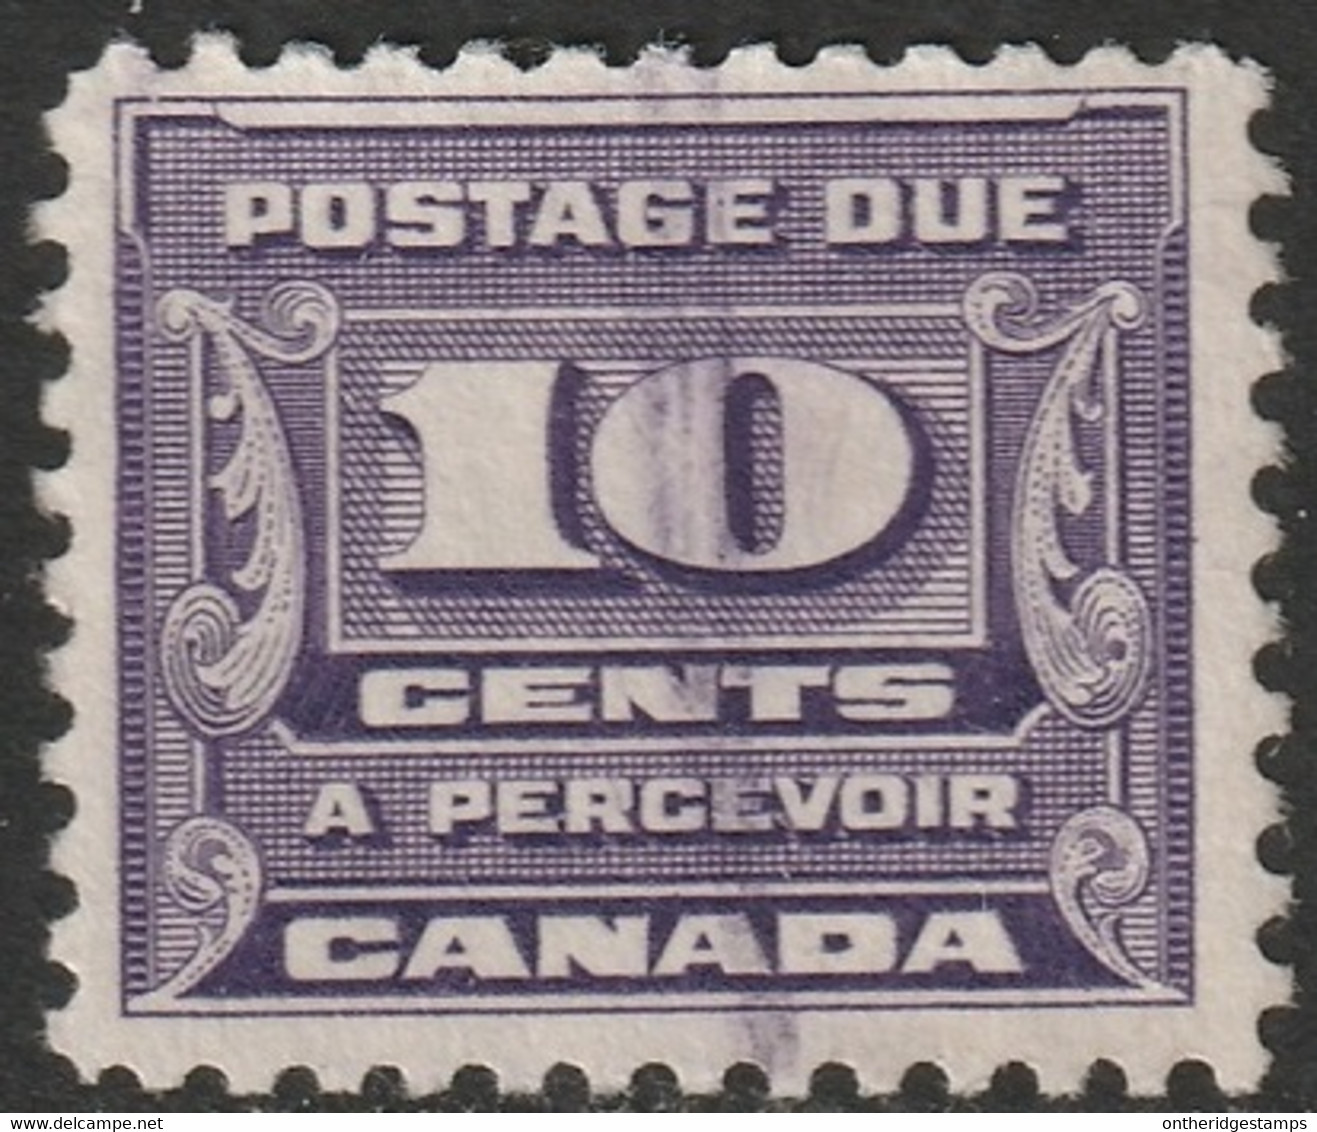 Canada 1933 Sc J14 Mi P14 Yt Taxe 13 Postage Due Used - Port Dû (Taxe)